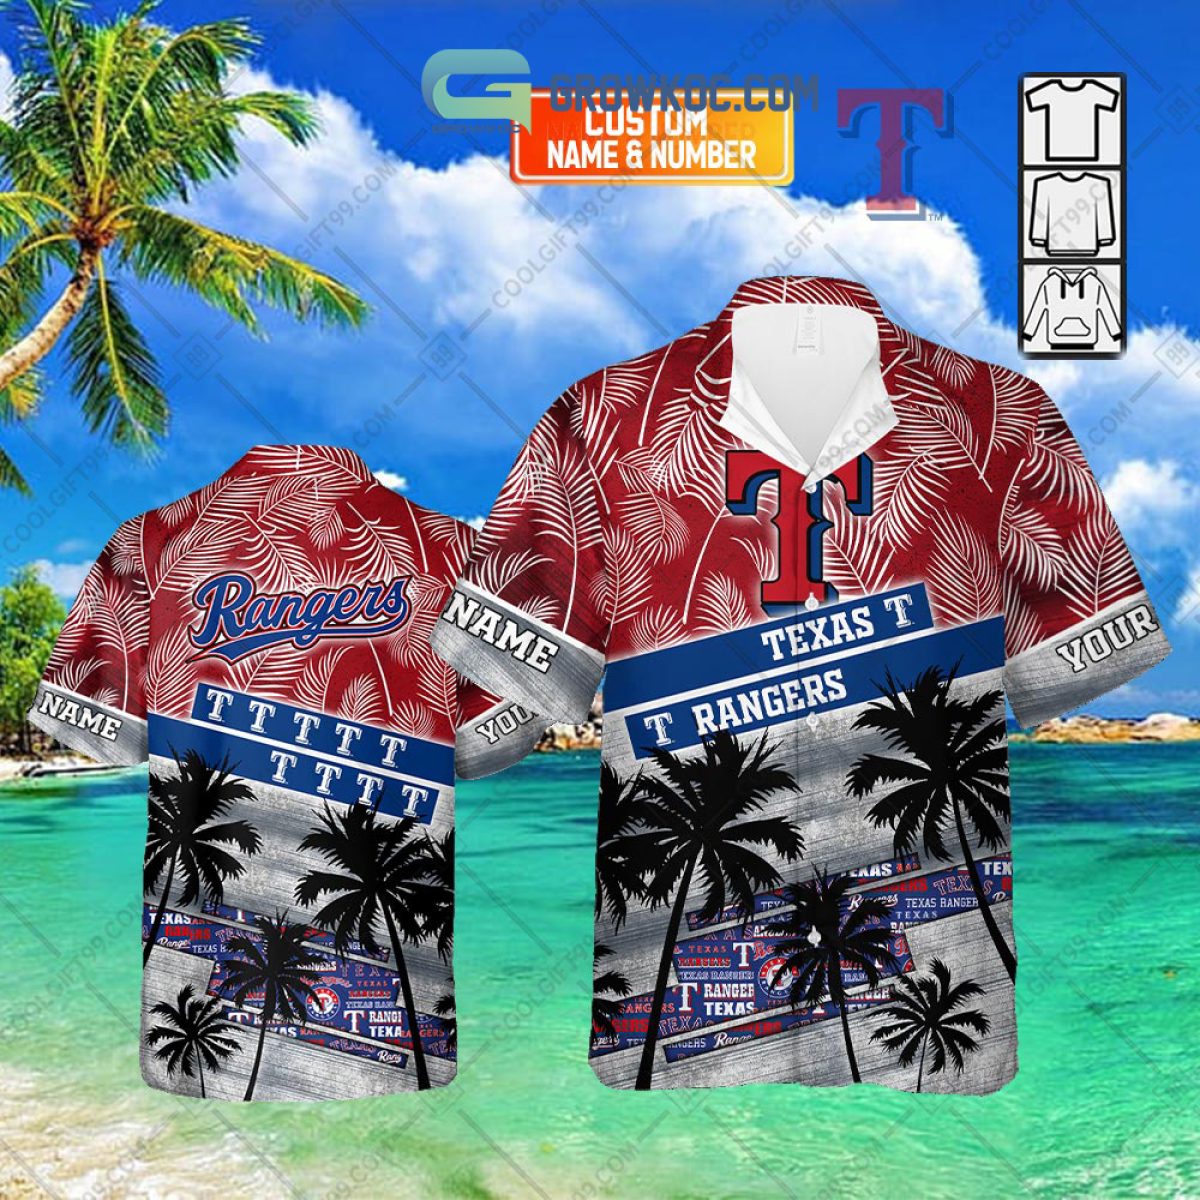 Milwaukee Brewers Major League Baseball 3D Print Hawaiian Shirt